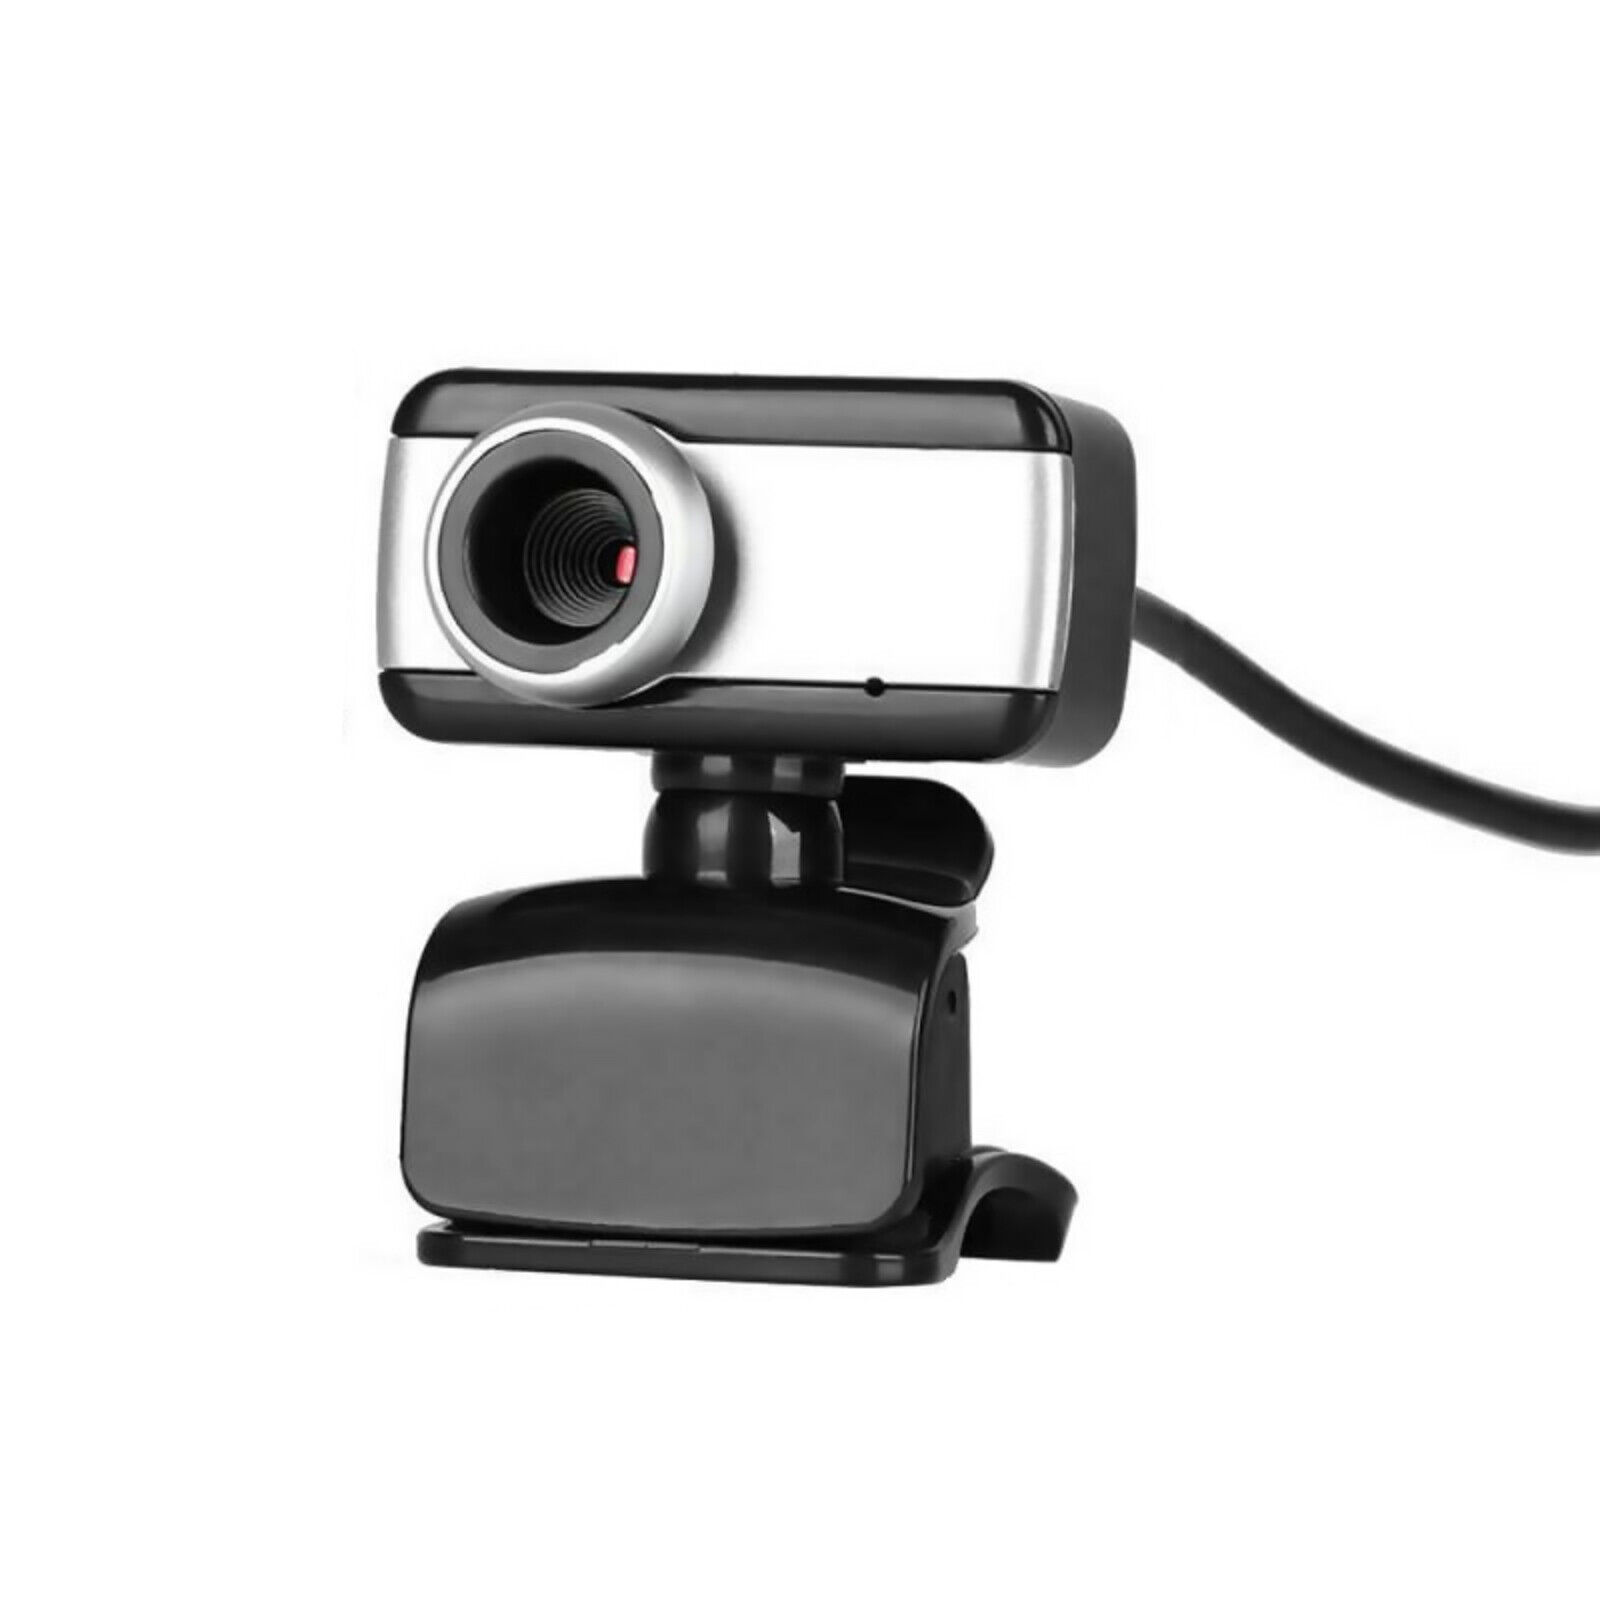 360 Degree Rotation Base 480P Resolution Webcam USB 2.0 Web Camera+Microphone F